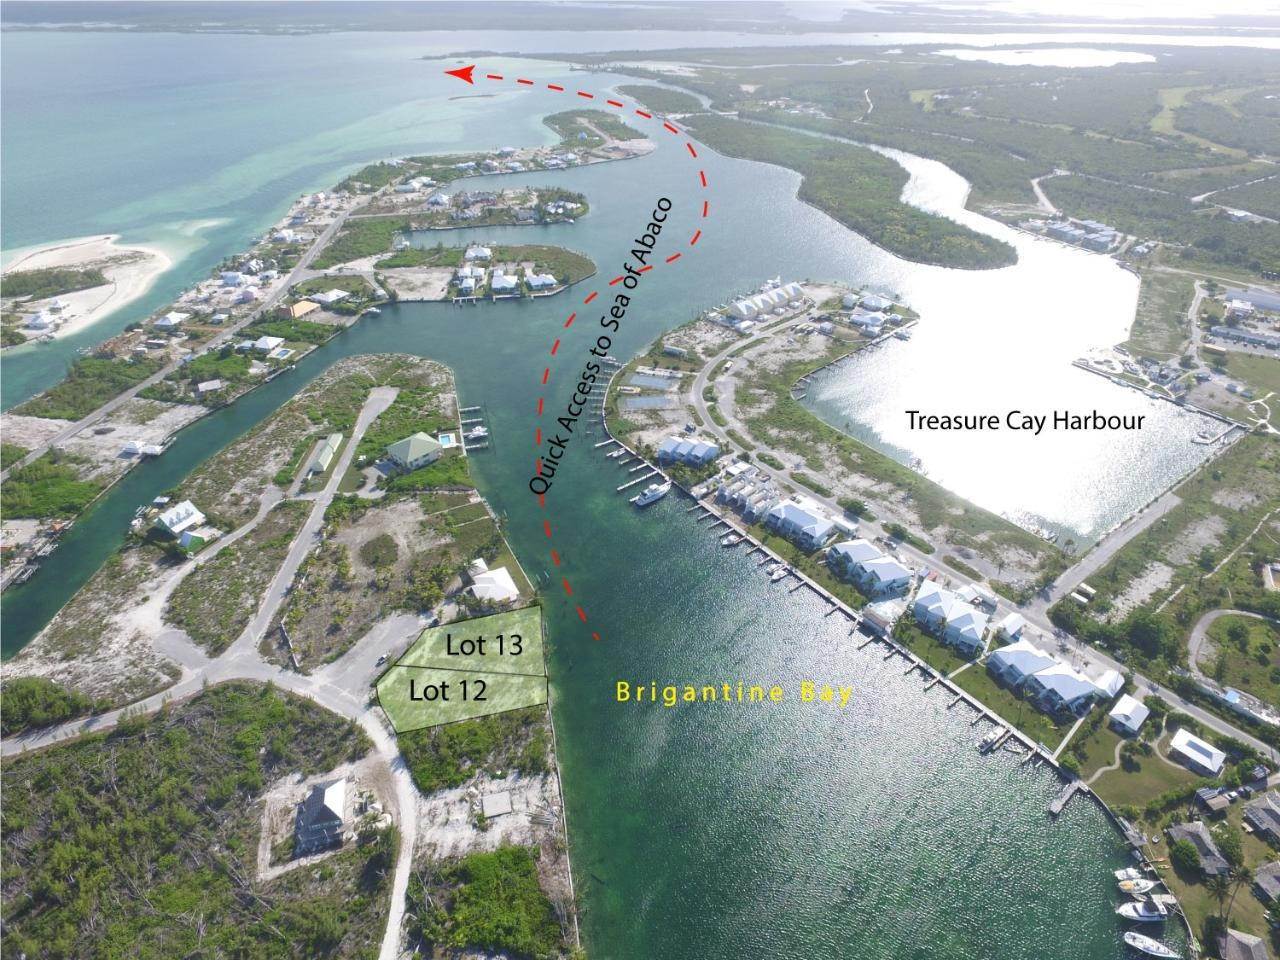 4. Lots / Acreage for Sale at Brigantine Bay, Treasure Cay, Abaco, Bahamas